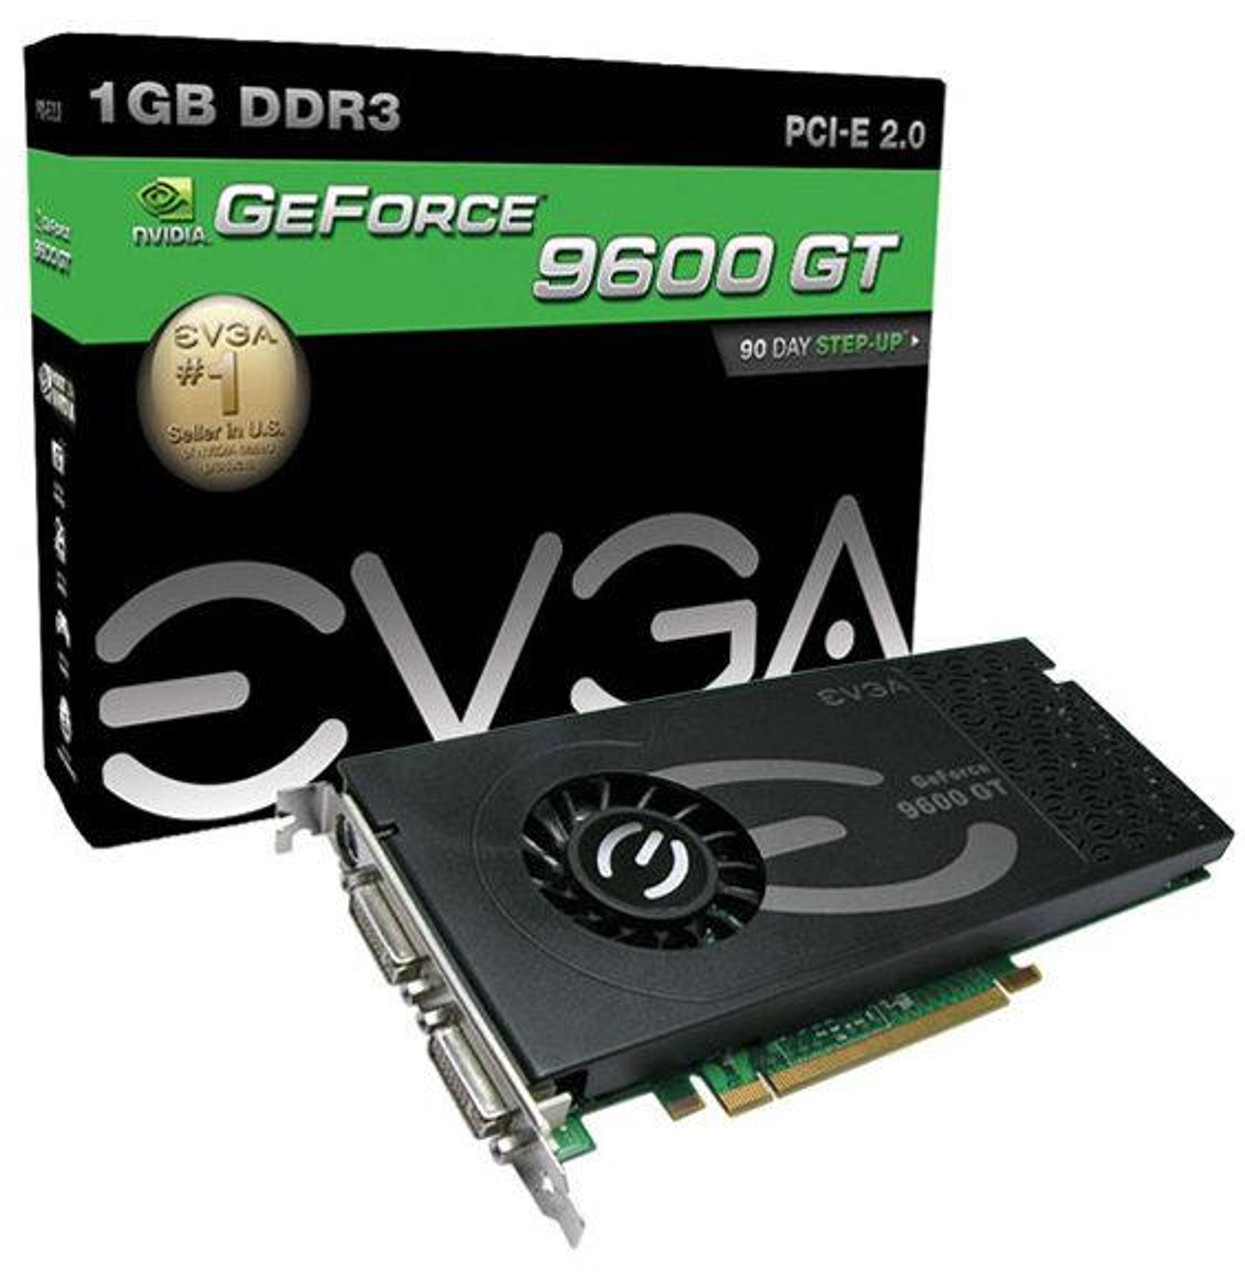 01G-P3-N859-TR EVGA GeForce 9600 GT 1GB GDDR PCI Express Low Power Vid